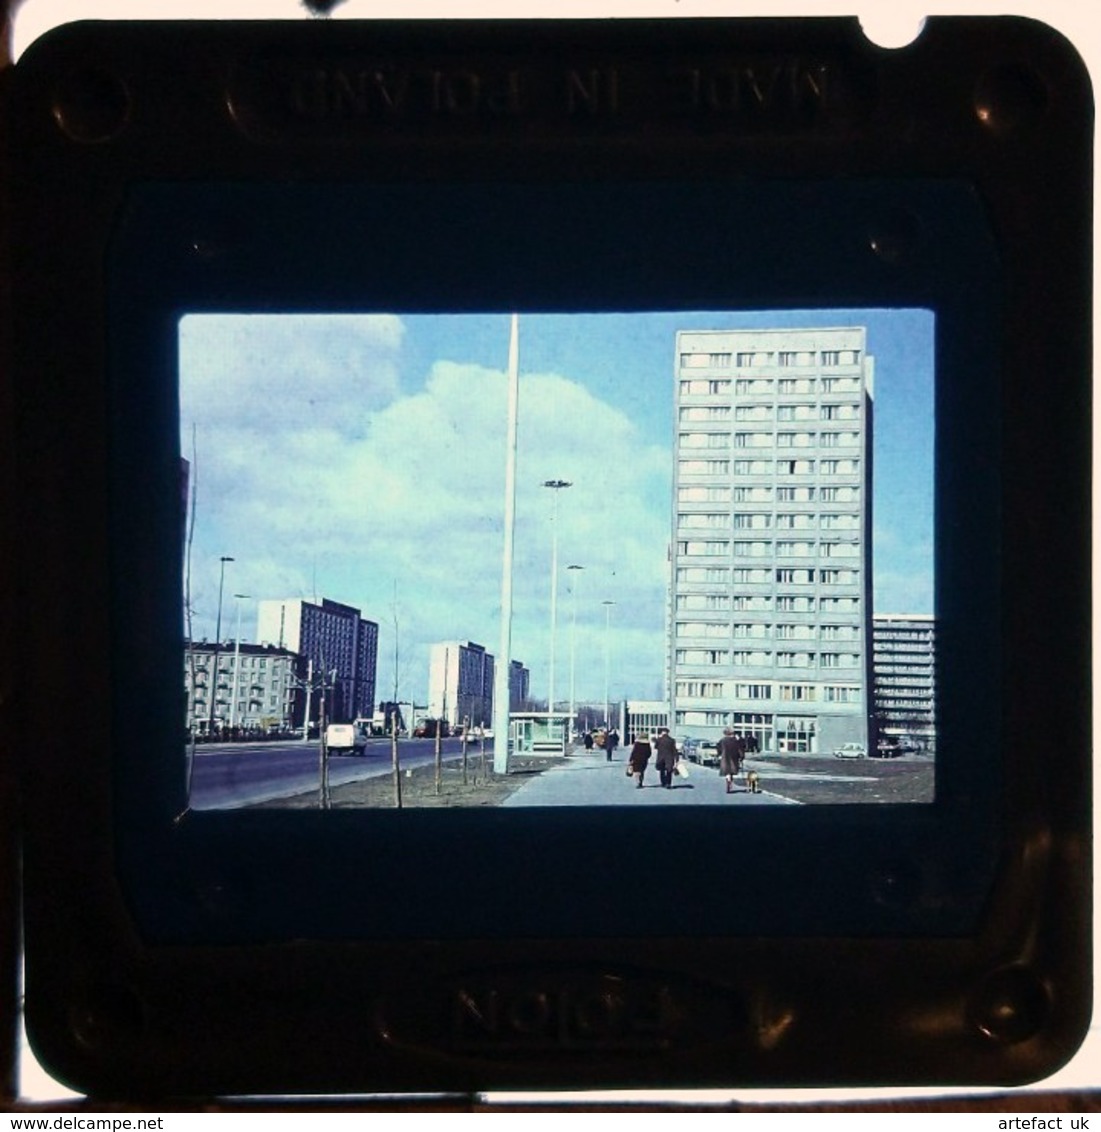 WARSZAWA WARSAW WARSCHAU VARSOVIE 1974, Original Colour 35mm Slide - Dias